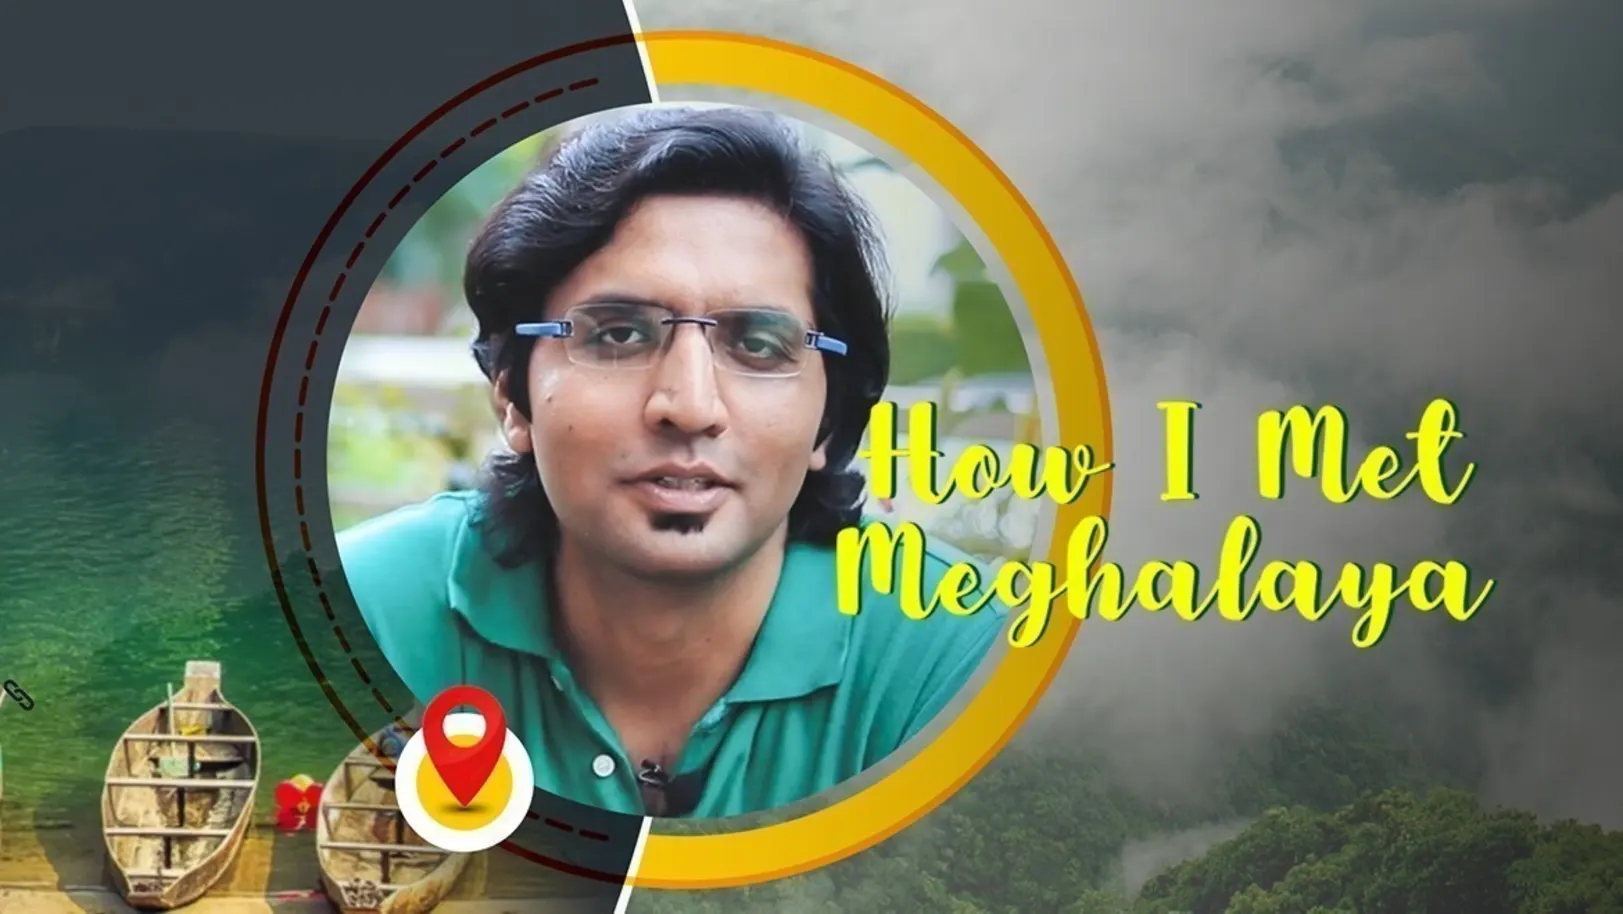 How I Met Meghalaya TV Show